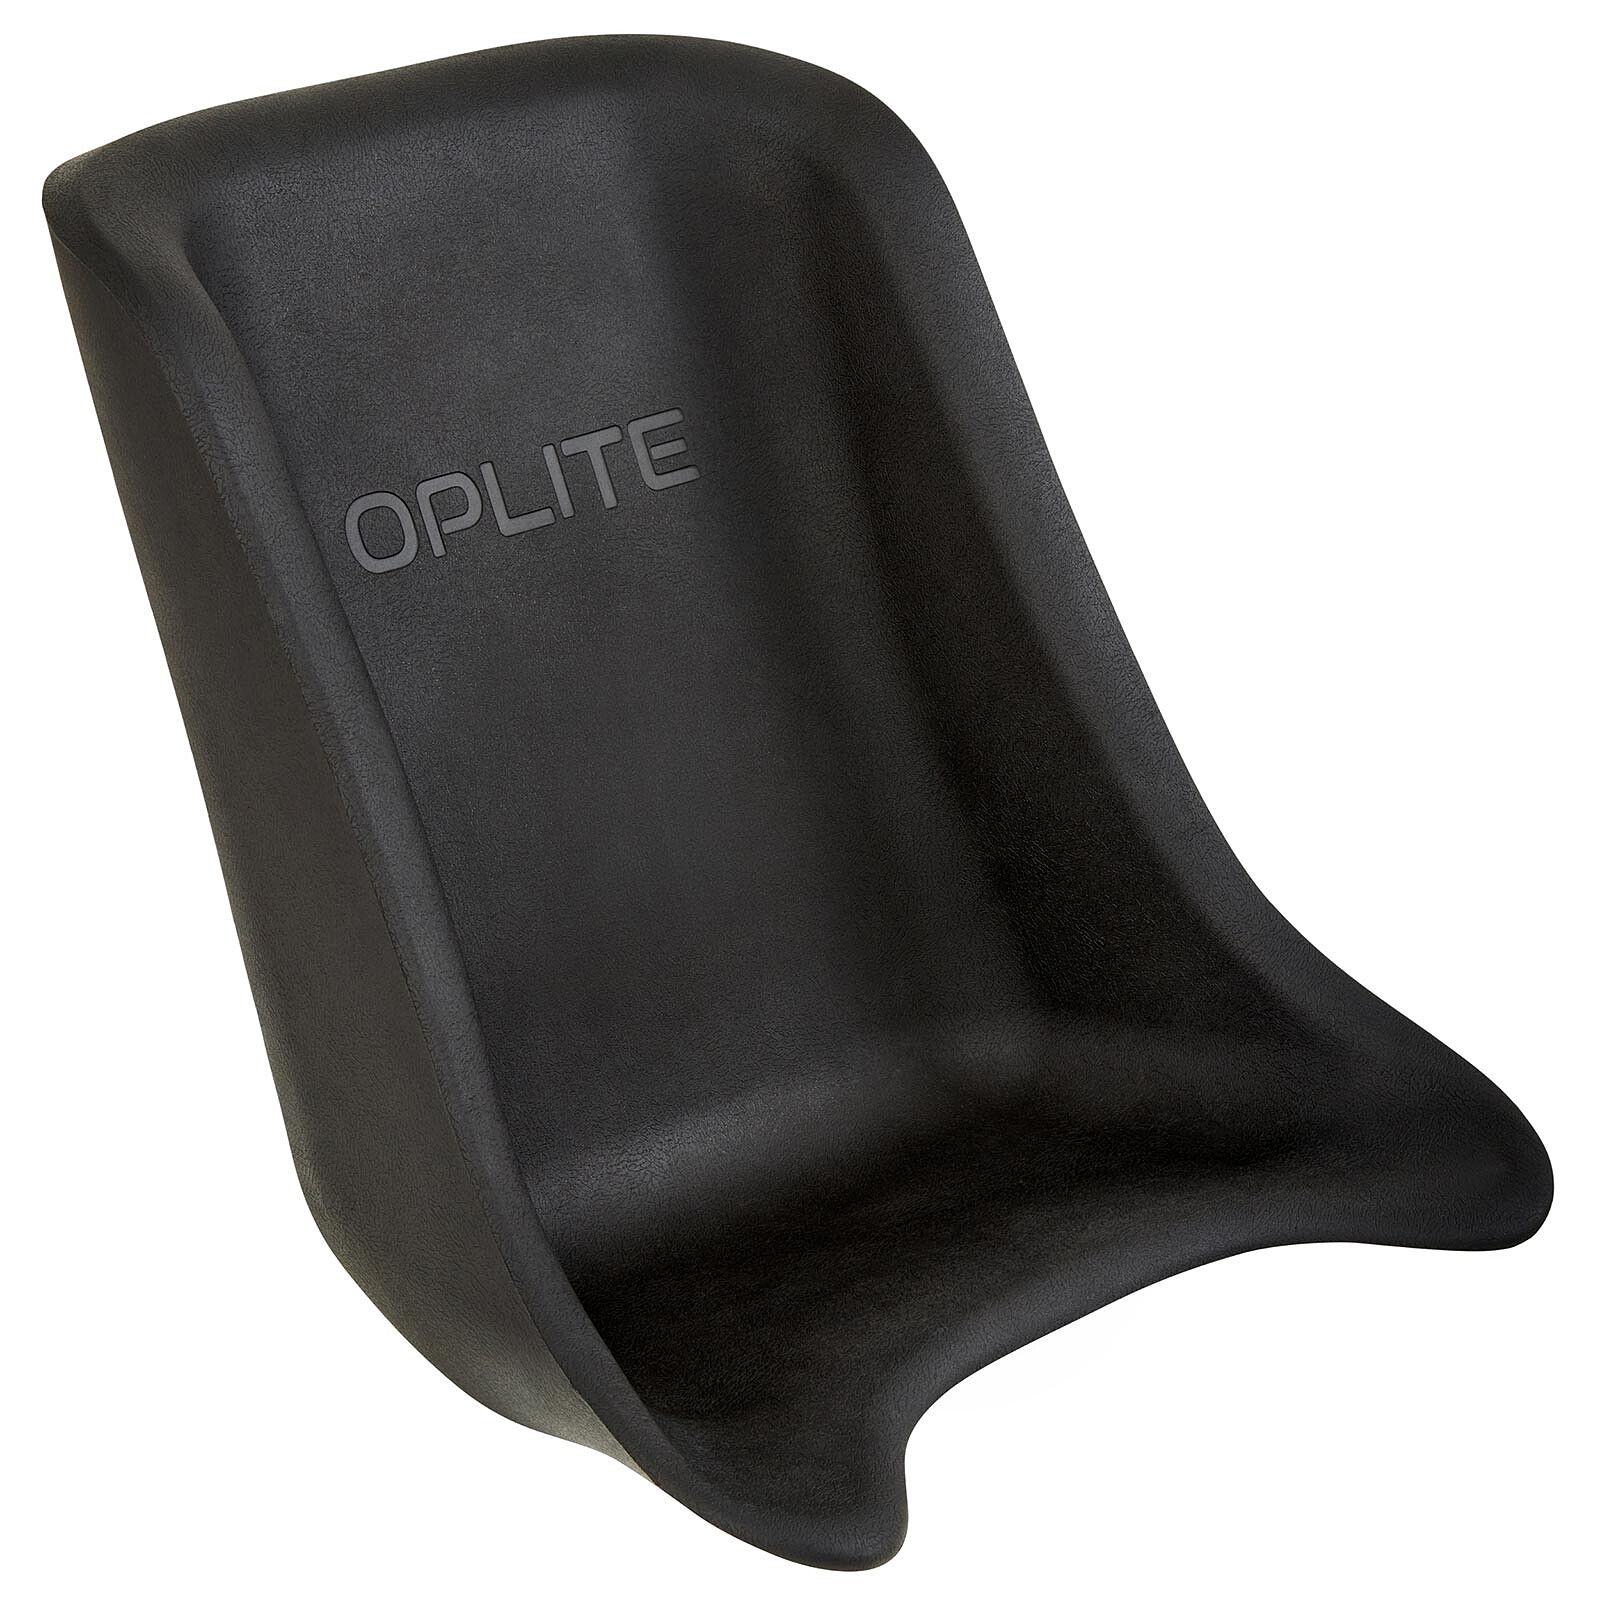 Review: Oplite Nitrokart - the ideal family chair? 